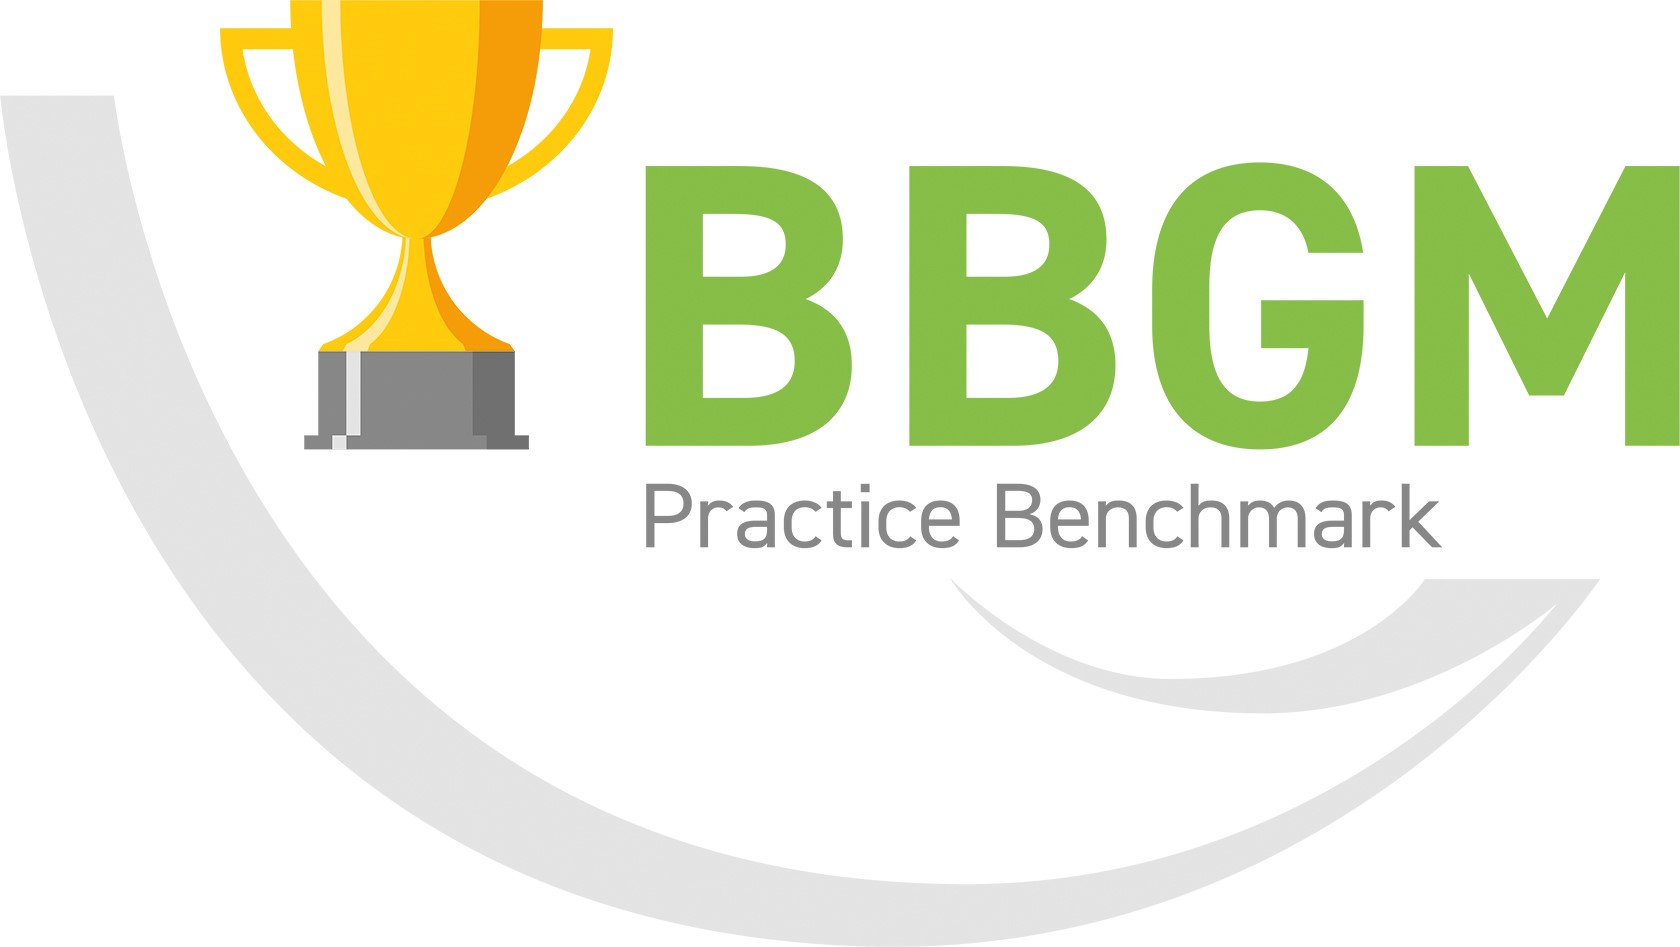 Practice Benchmark / Best Practice